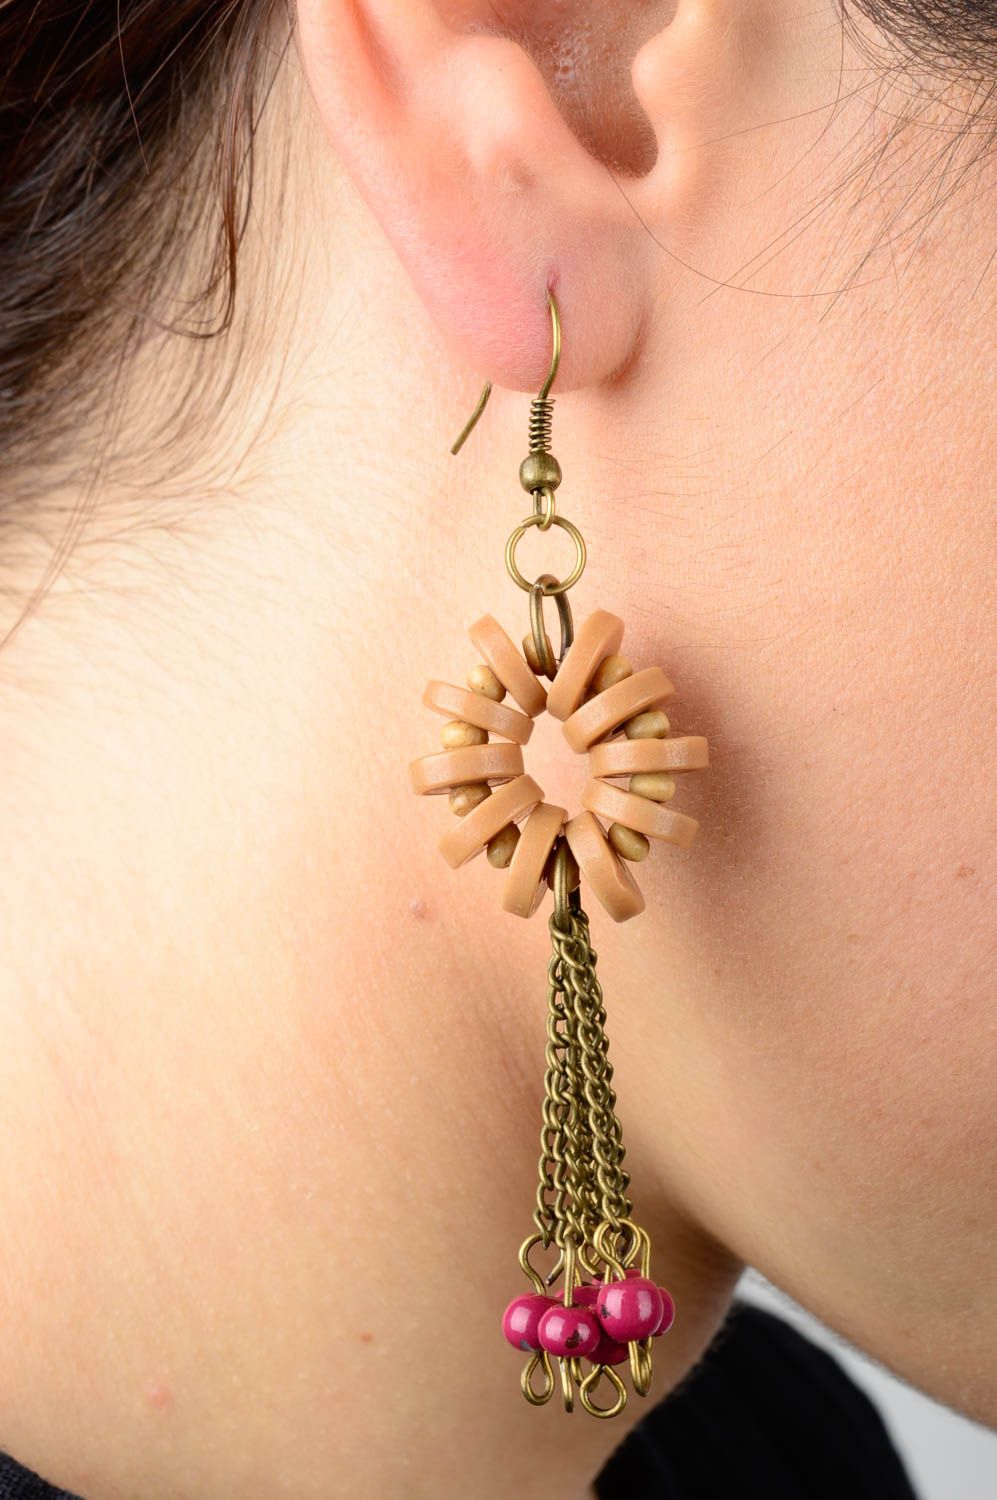 Handmade earrings designer jewelry unusual earrings for girls gift ideas photo 2